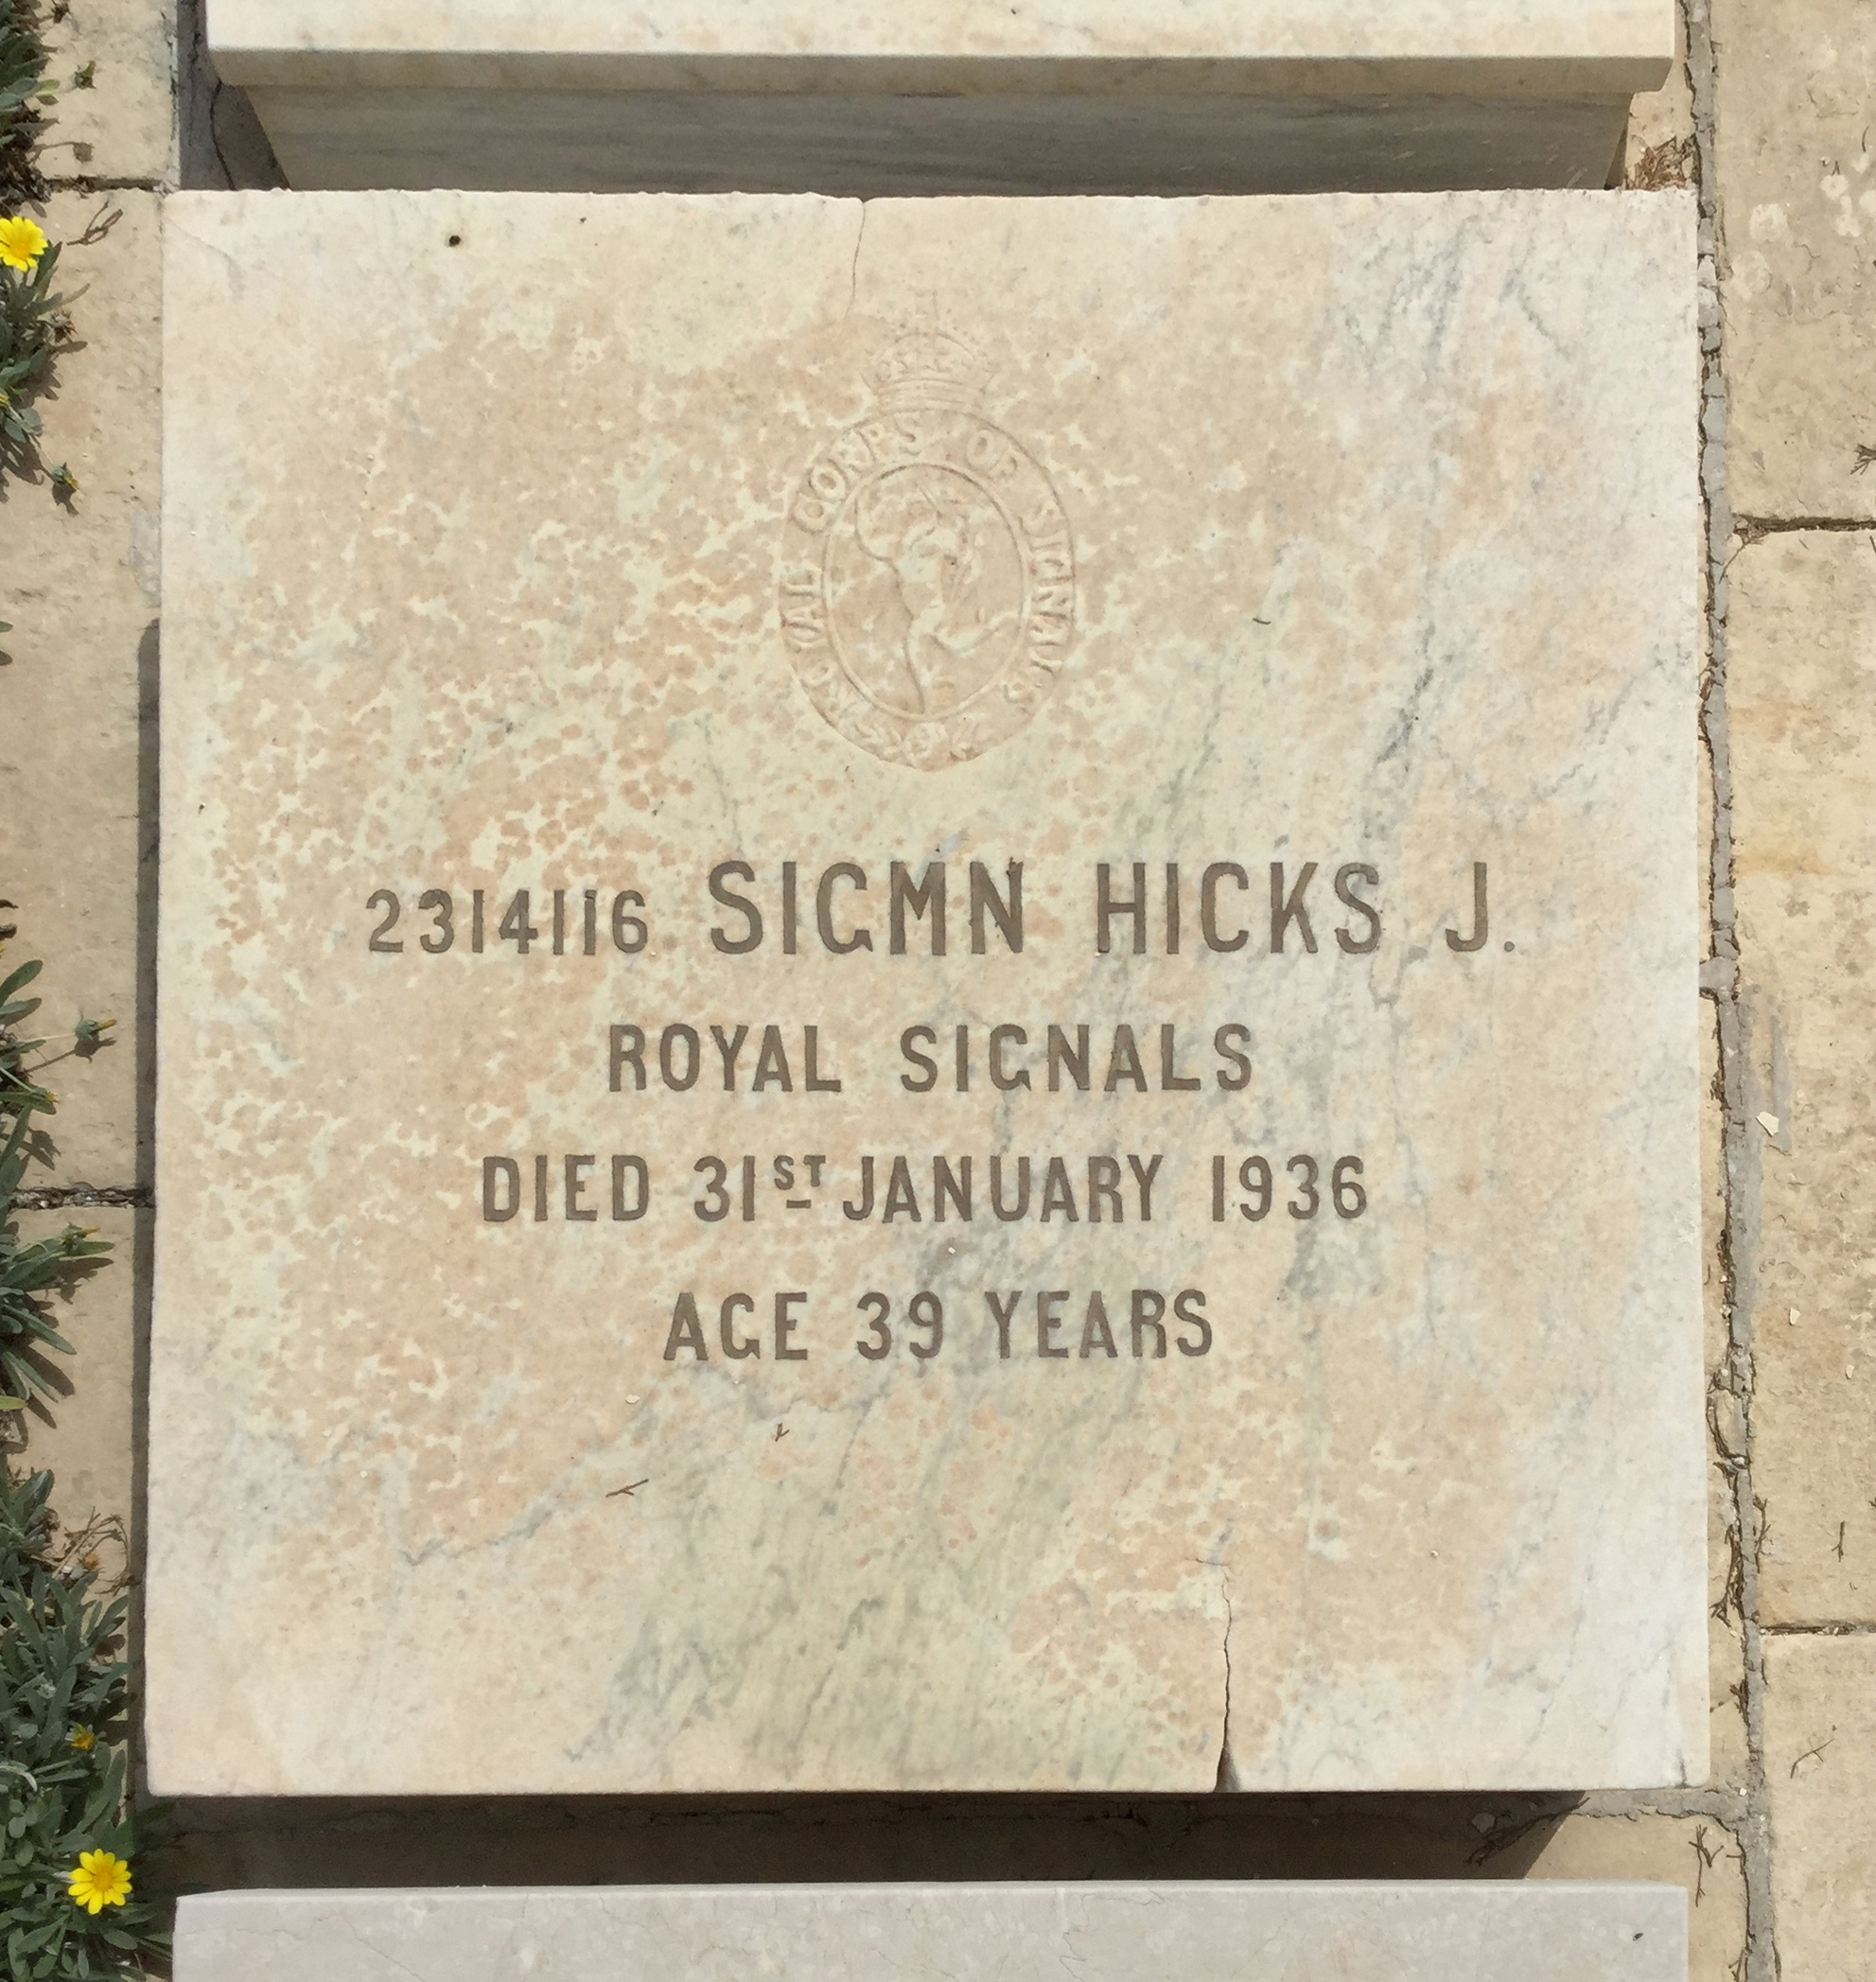 John HICKS